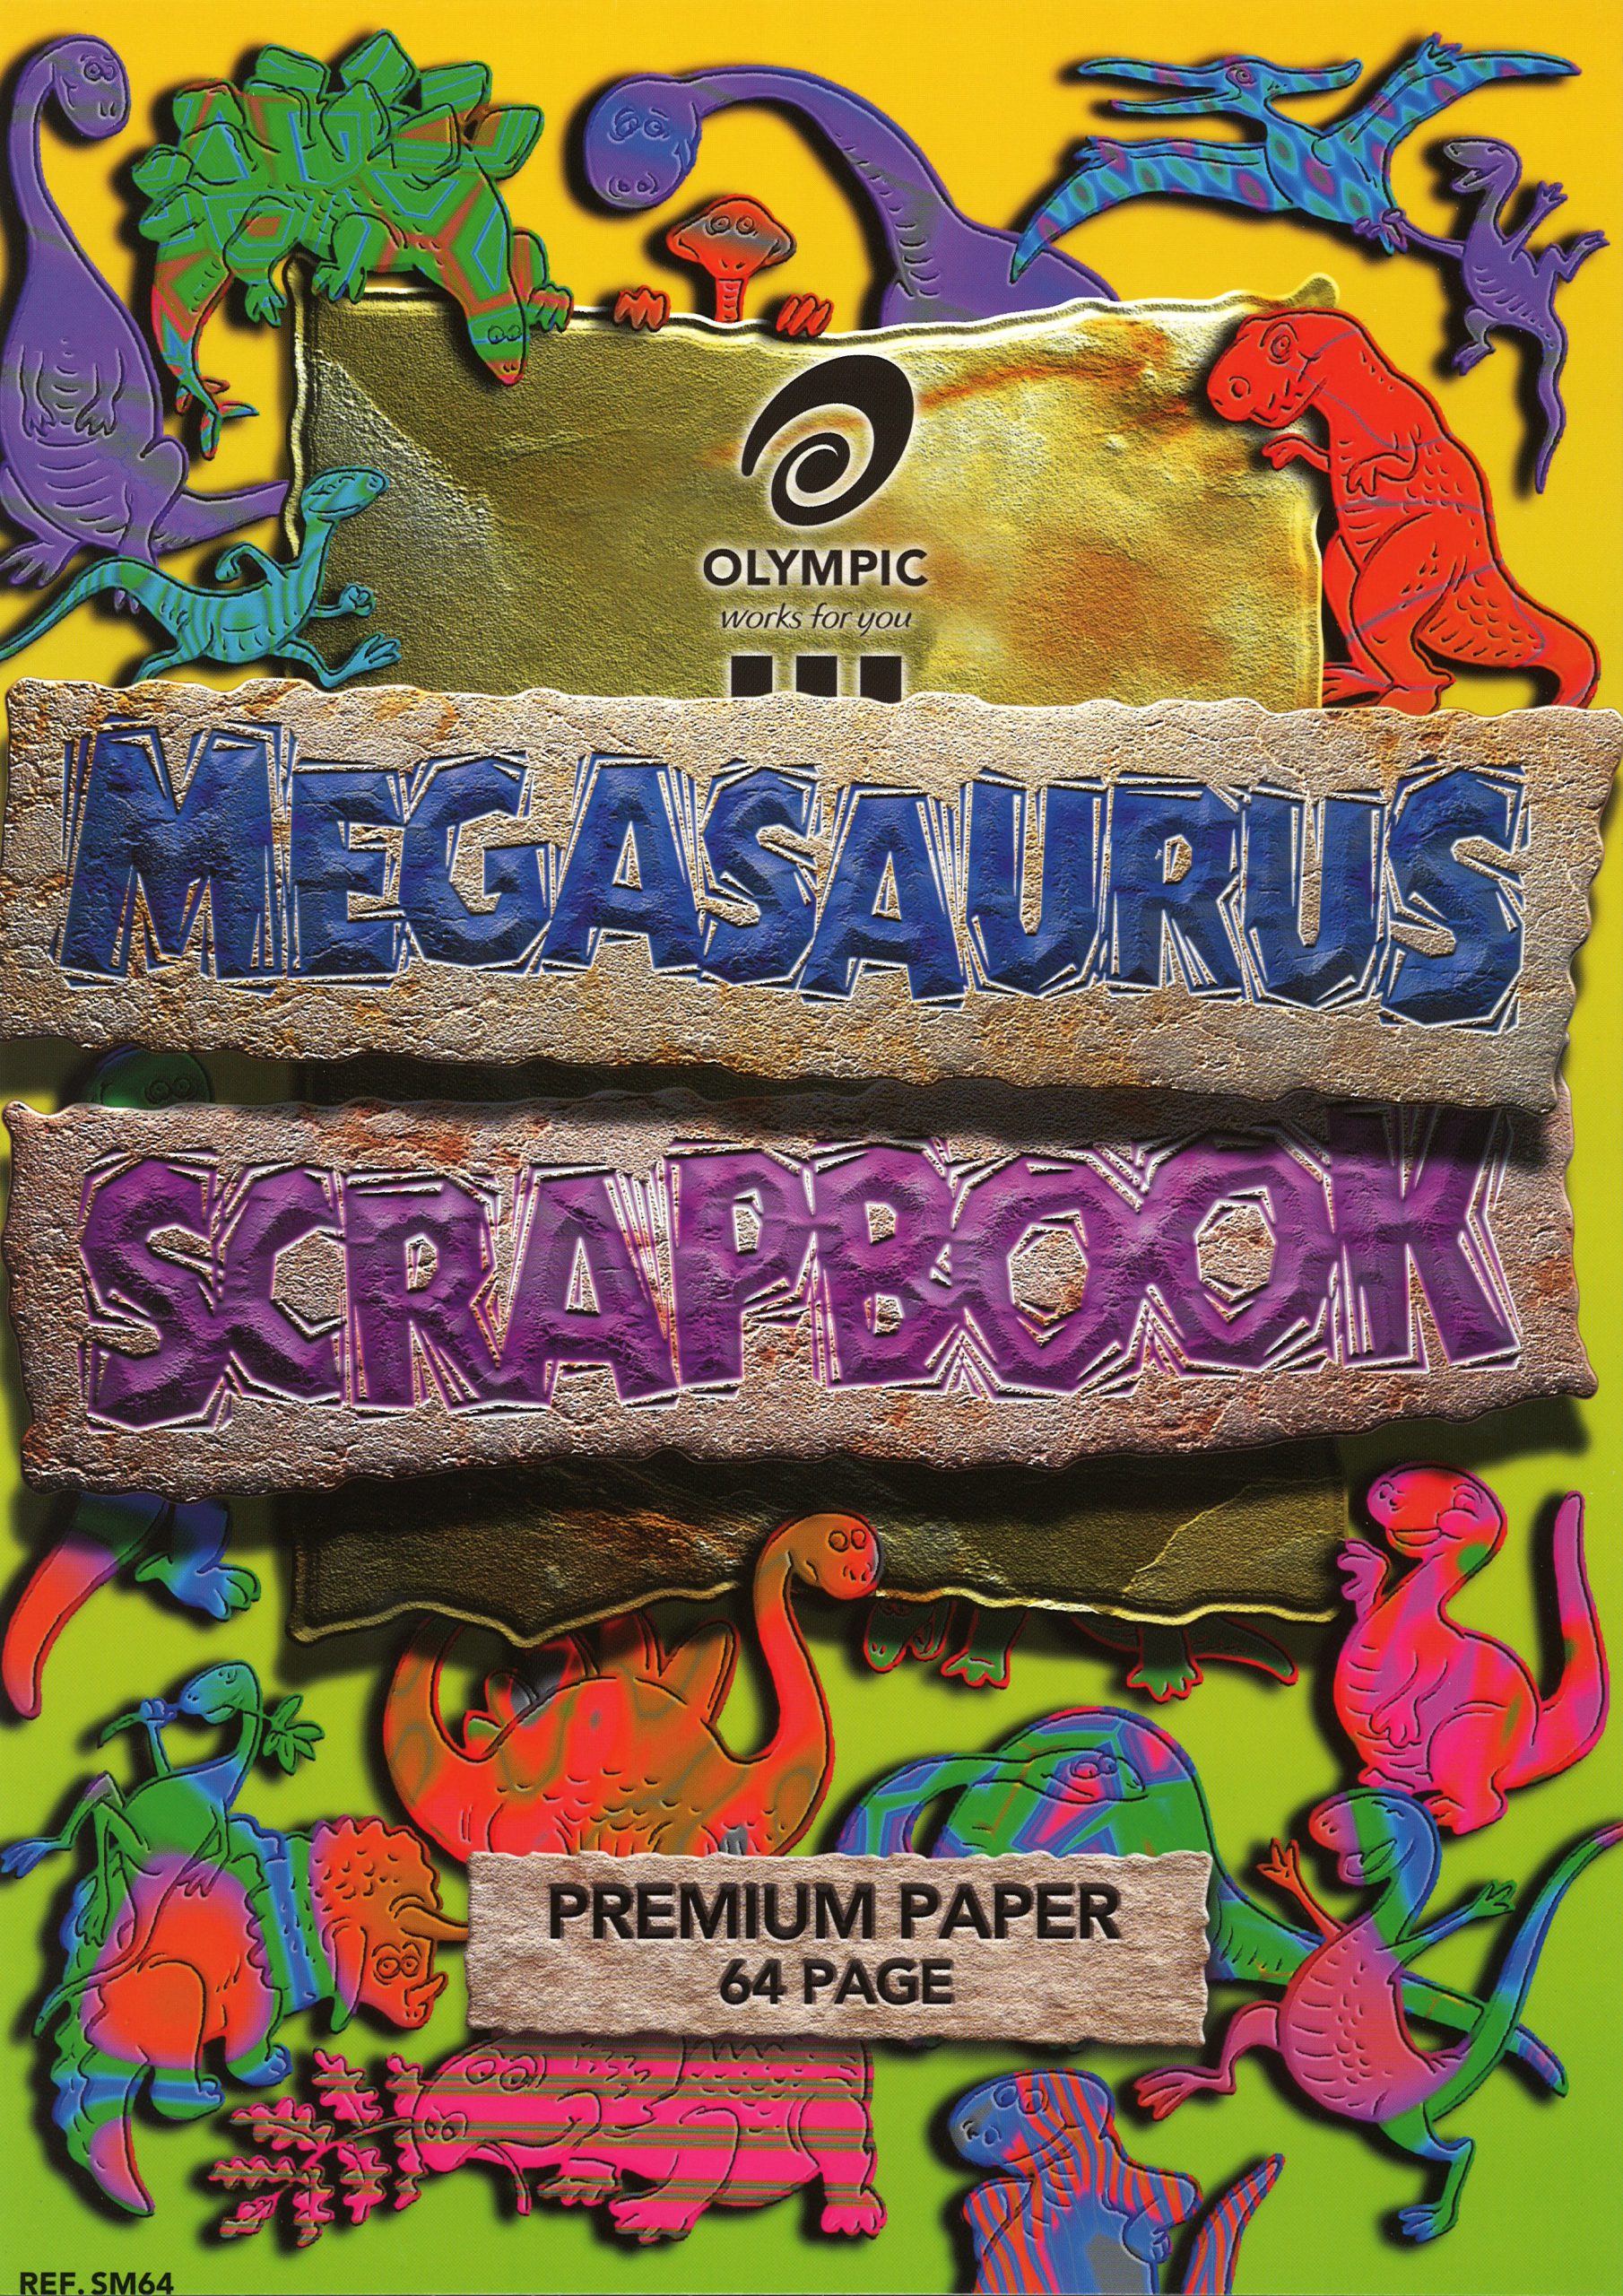 Scrap Book Megasaurus 335x245mm 64 Page